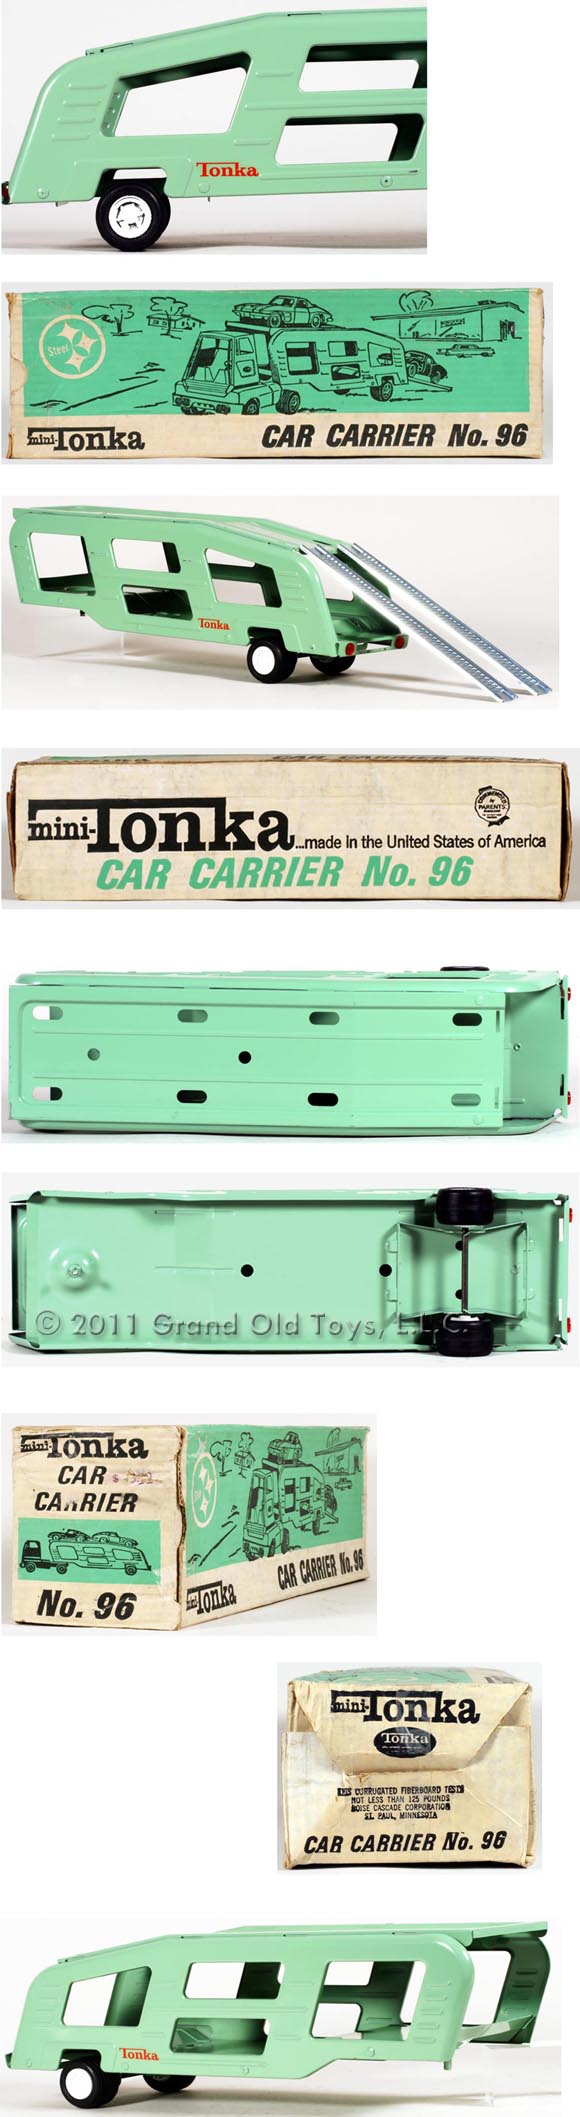 1974 Mini-Tonka No. 96 Car Carrier In Original Box